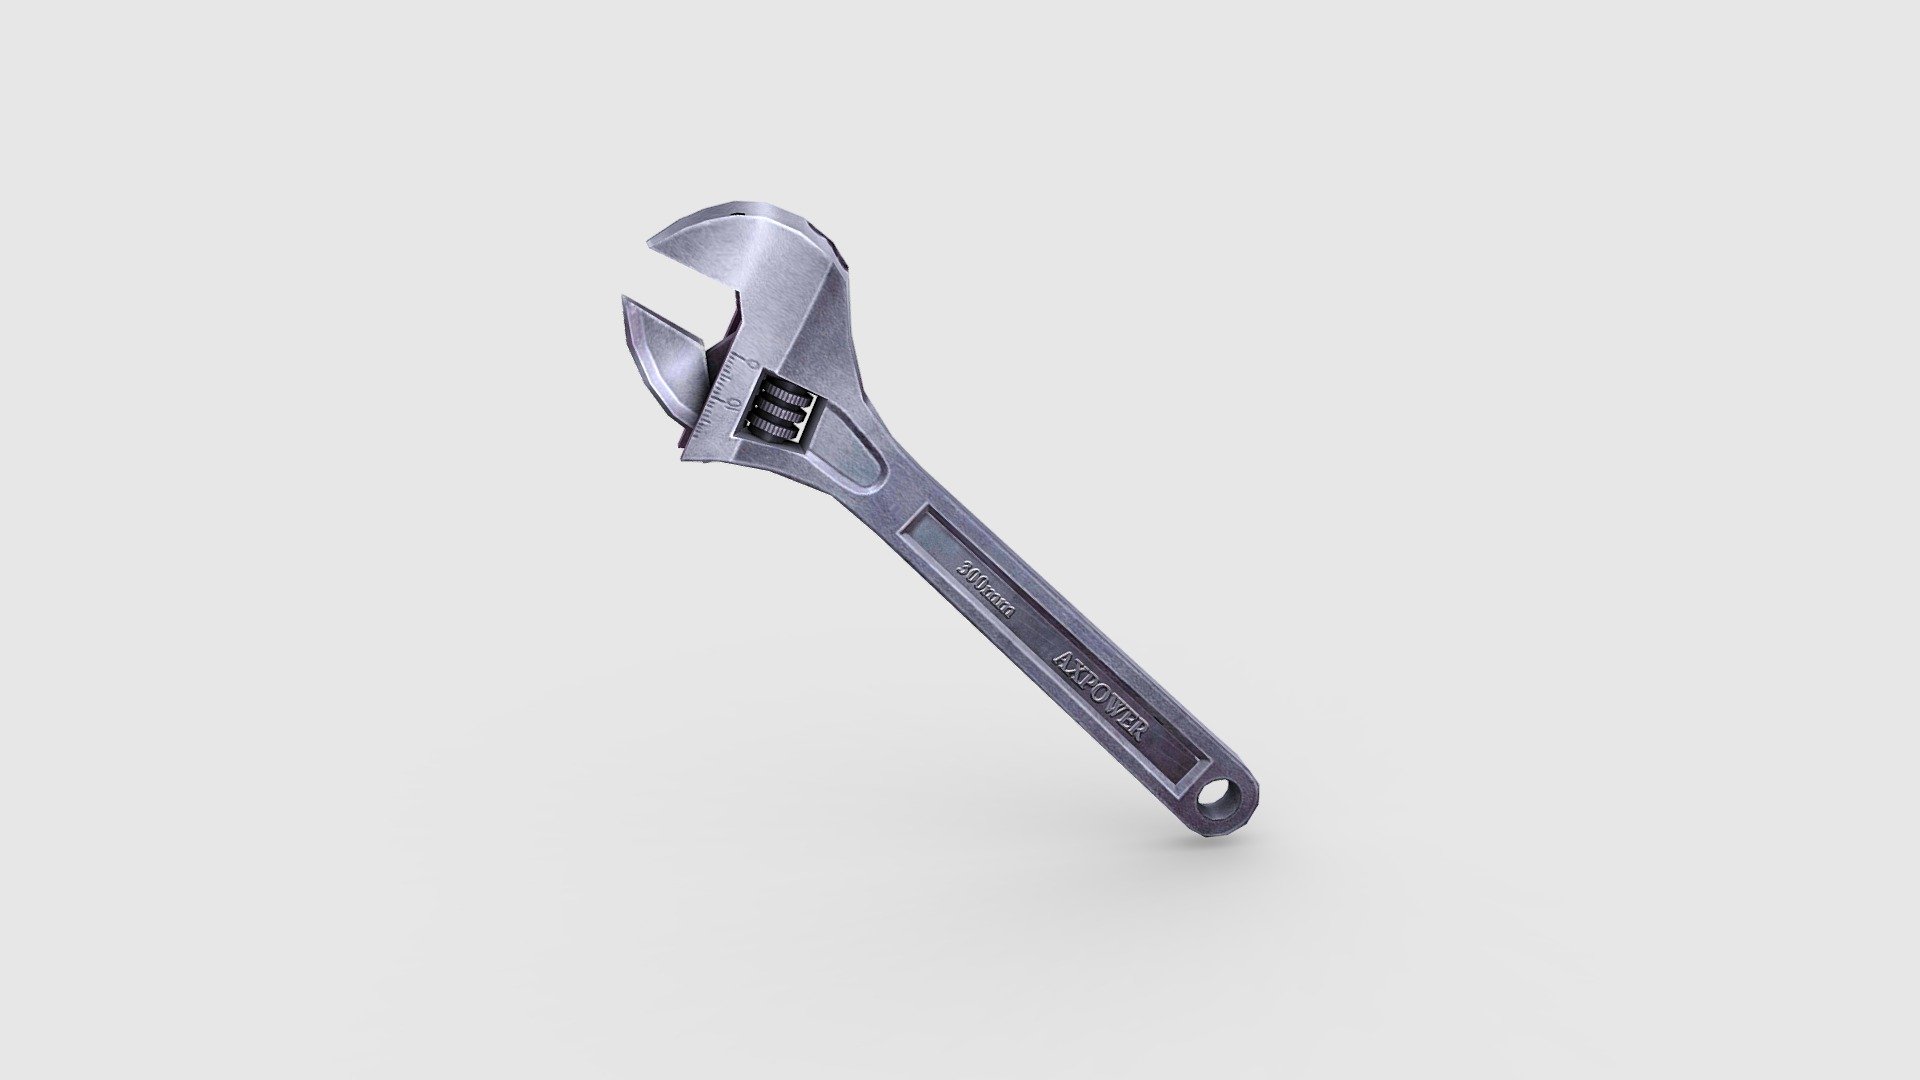 Cartoon wrench - repair tool Low-poly 3D model - Cartoon wrench - repair tool - 3D model by ler_cartoon (@lerrrrr) 3d model